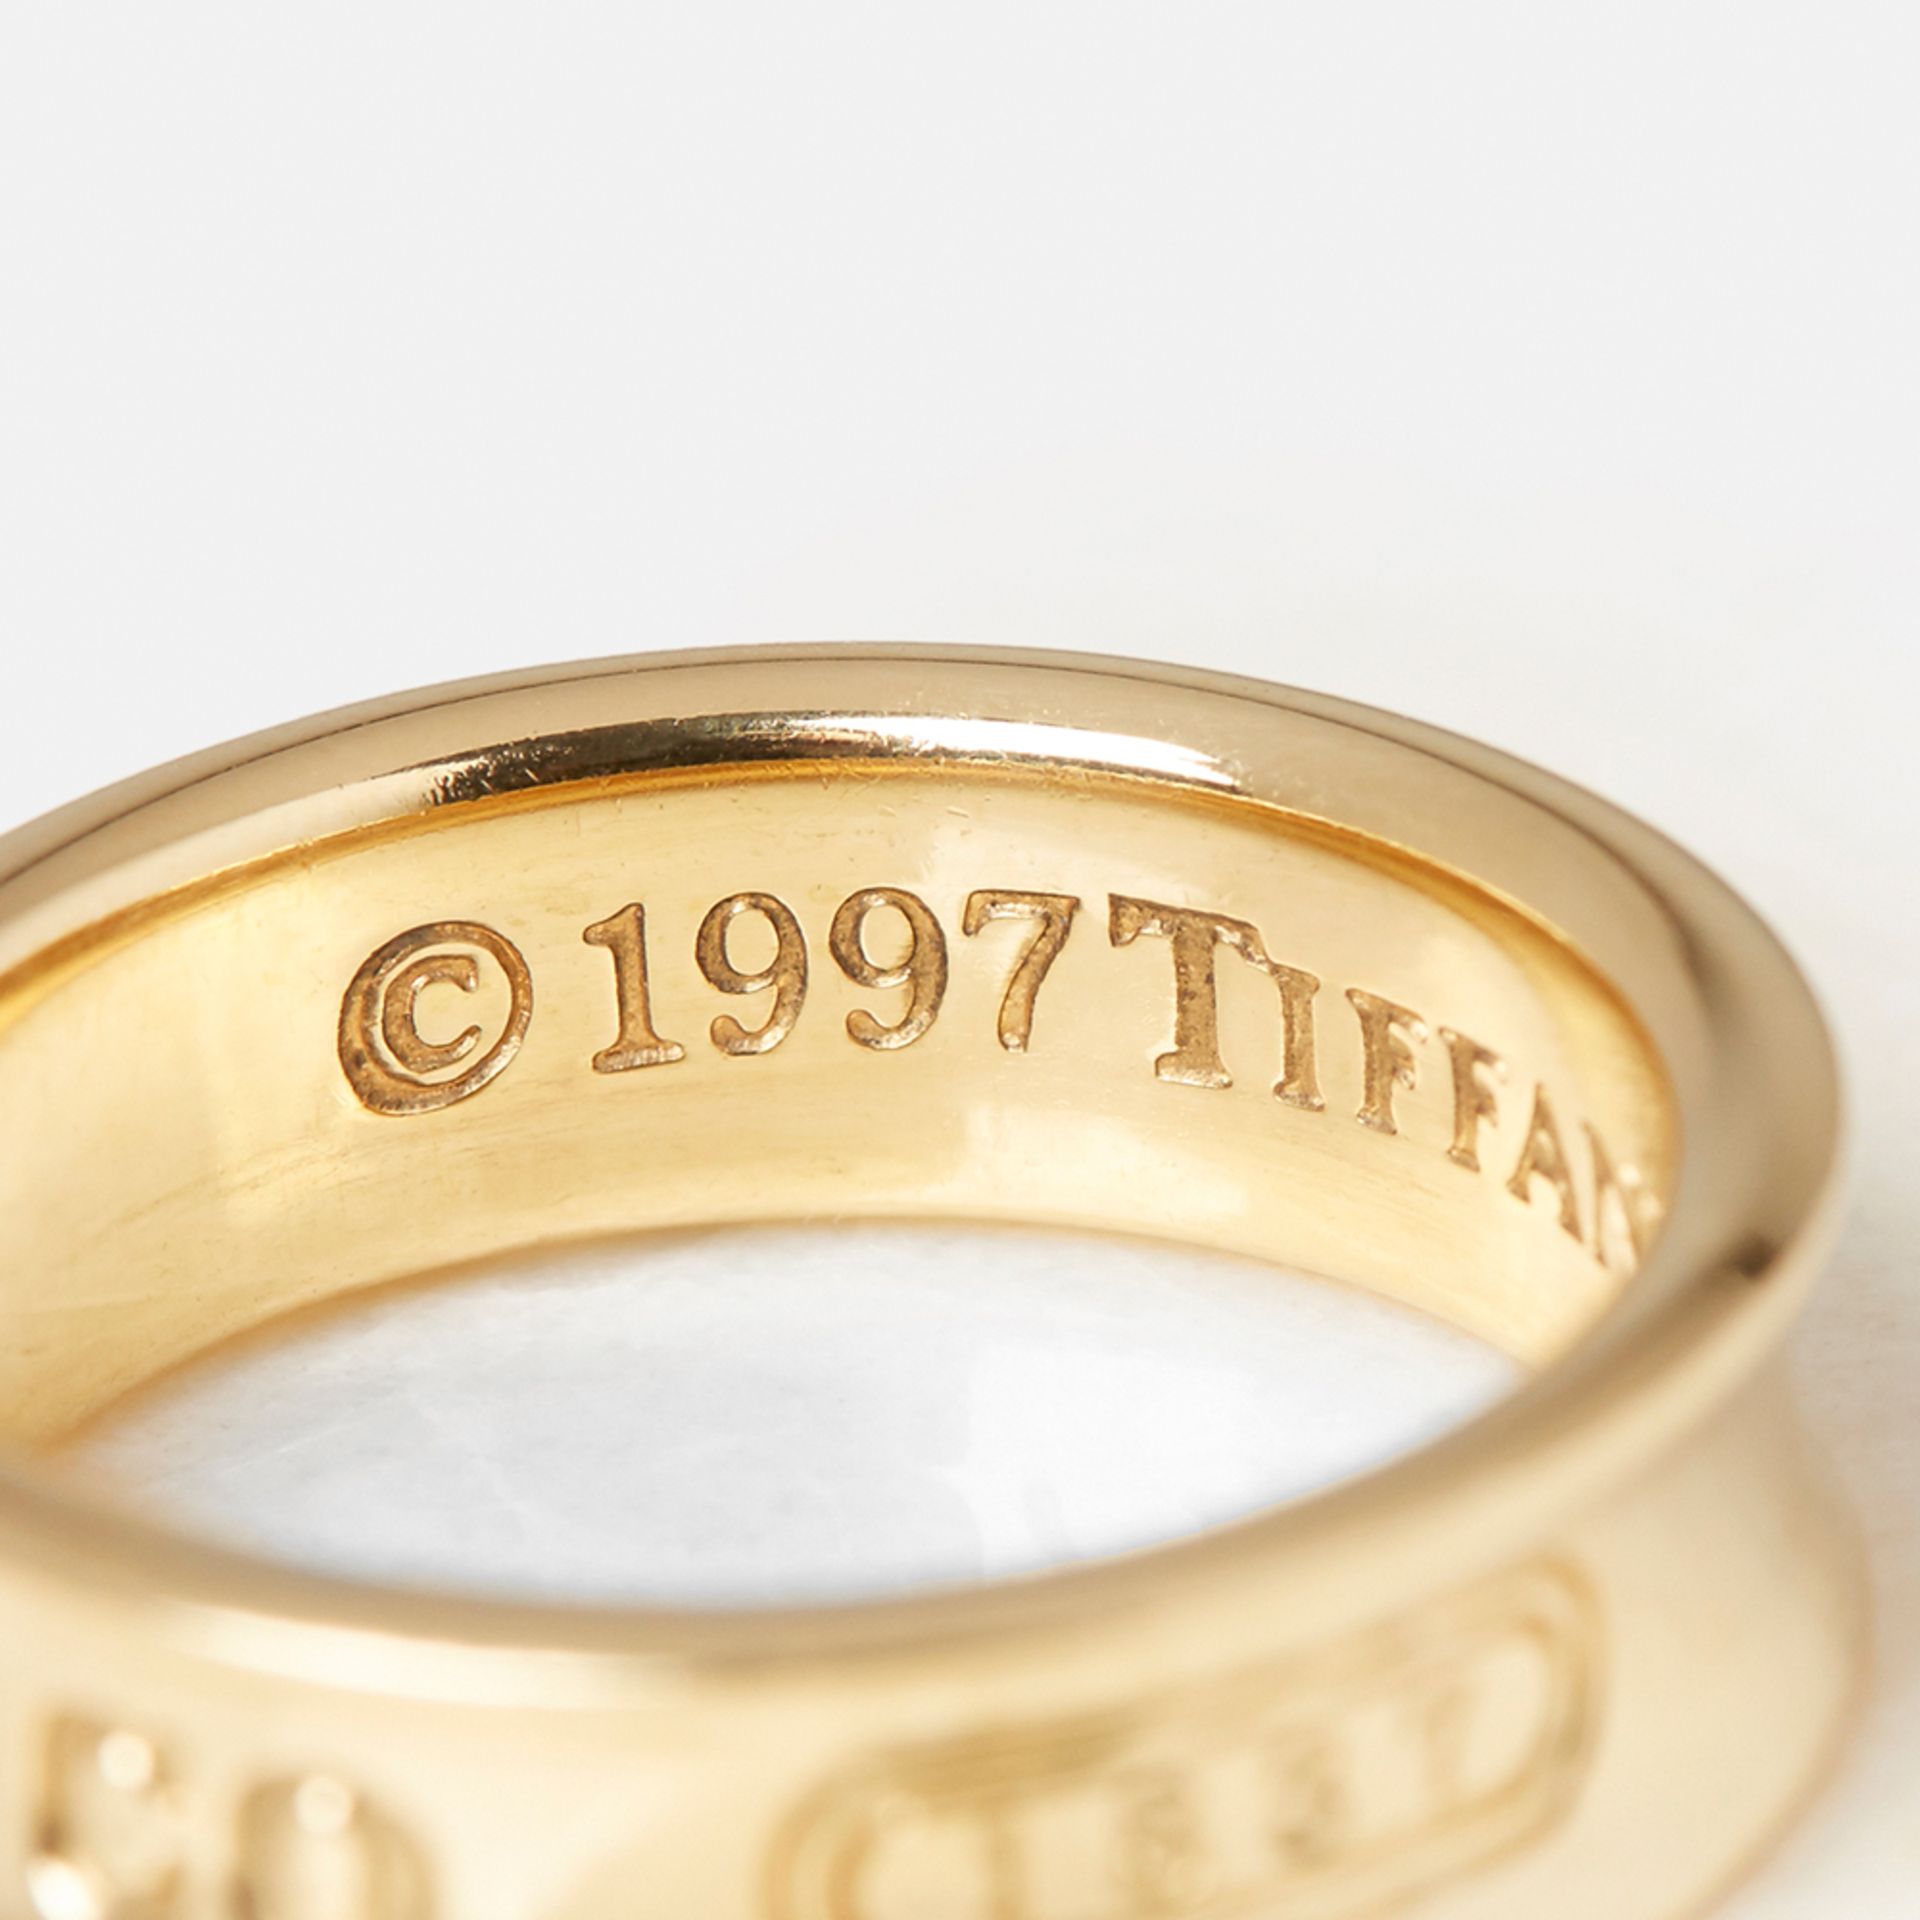 Tiffany & Co. 18k Yellow Gold Tiffany 1837 Ring - Image 6 of 8